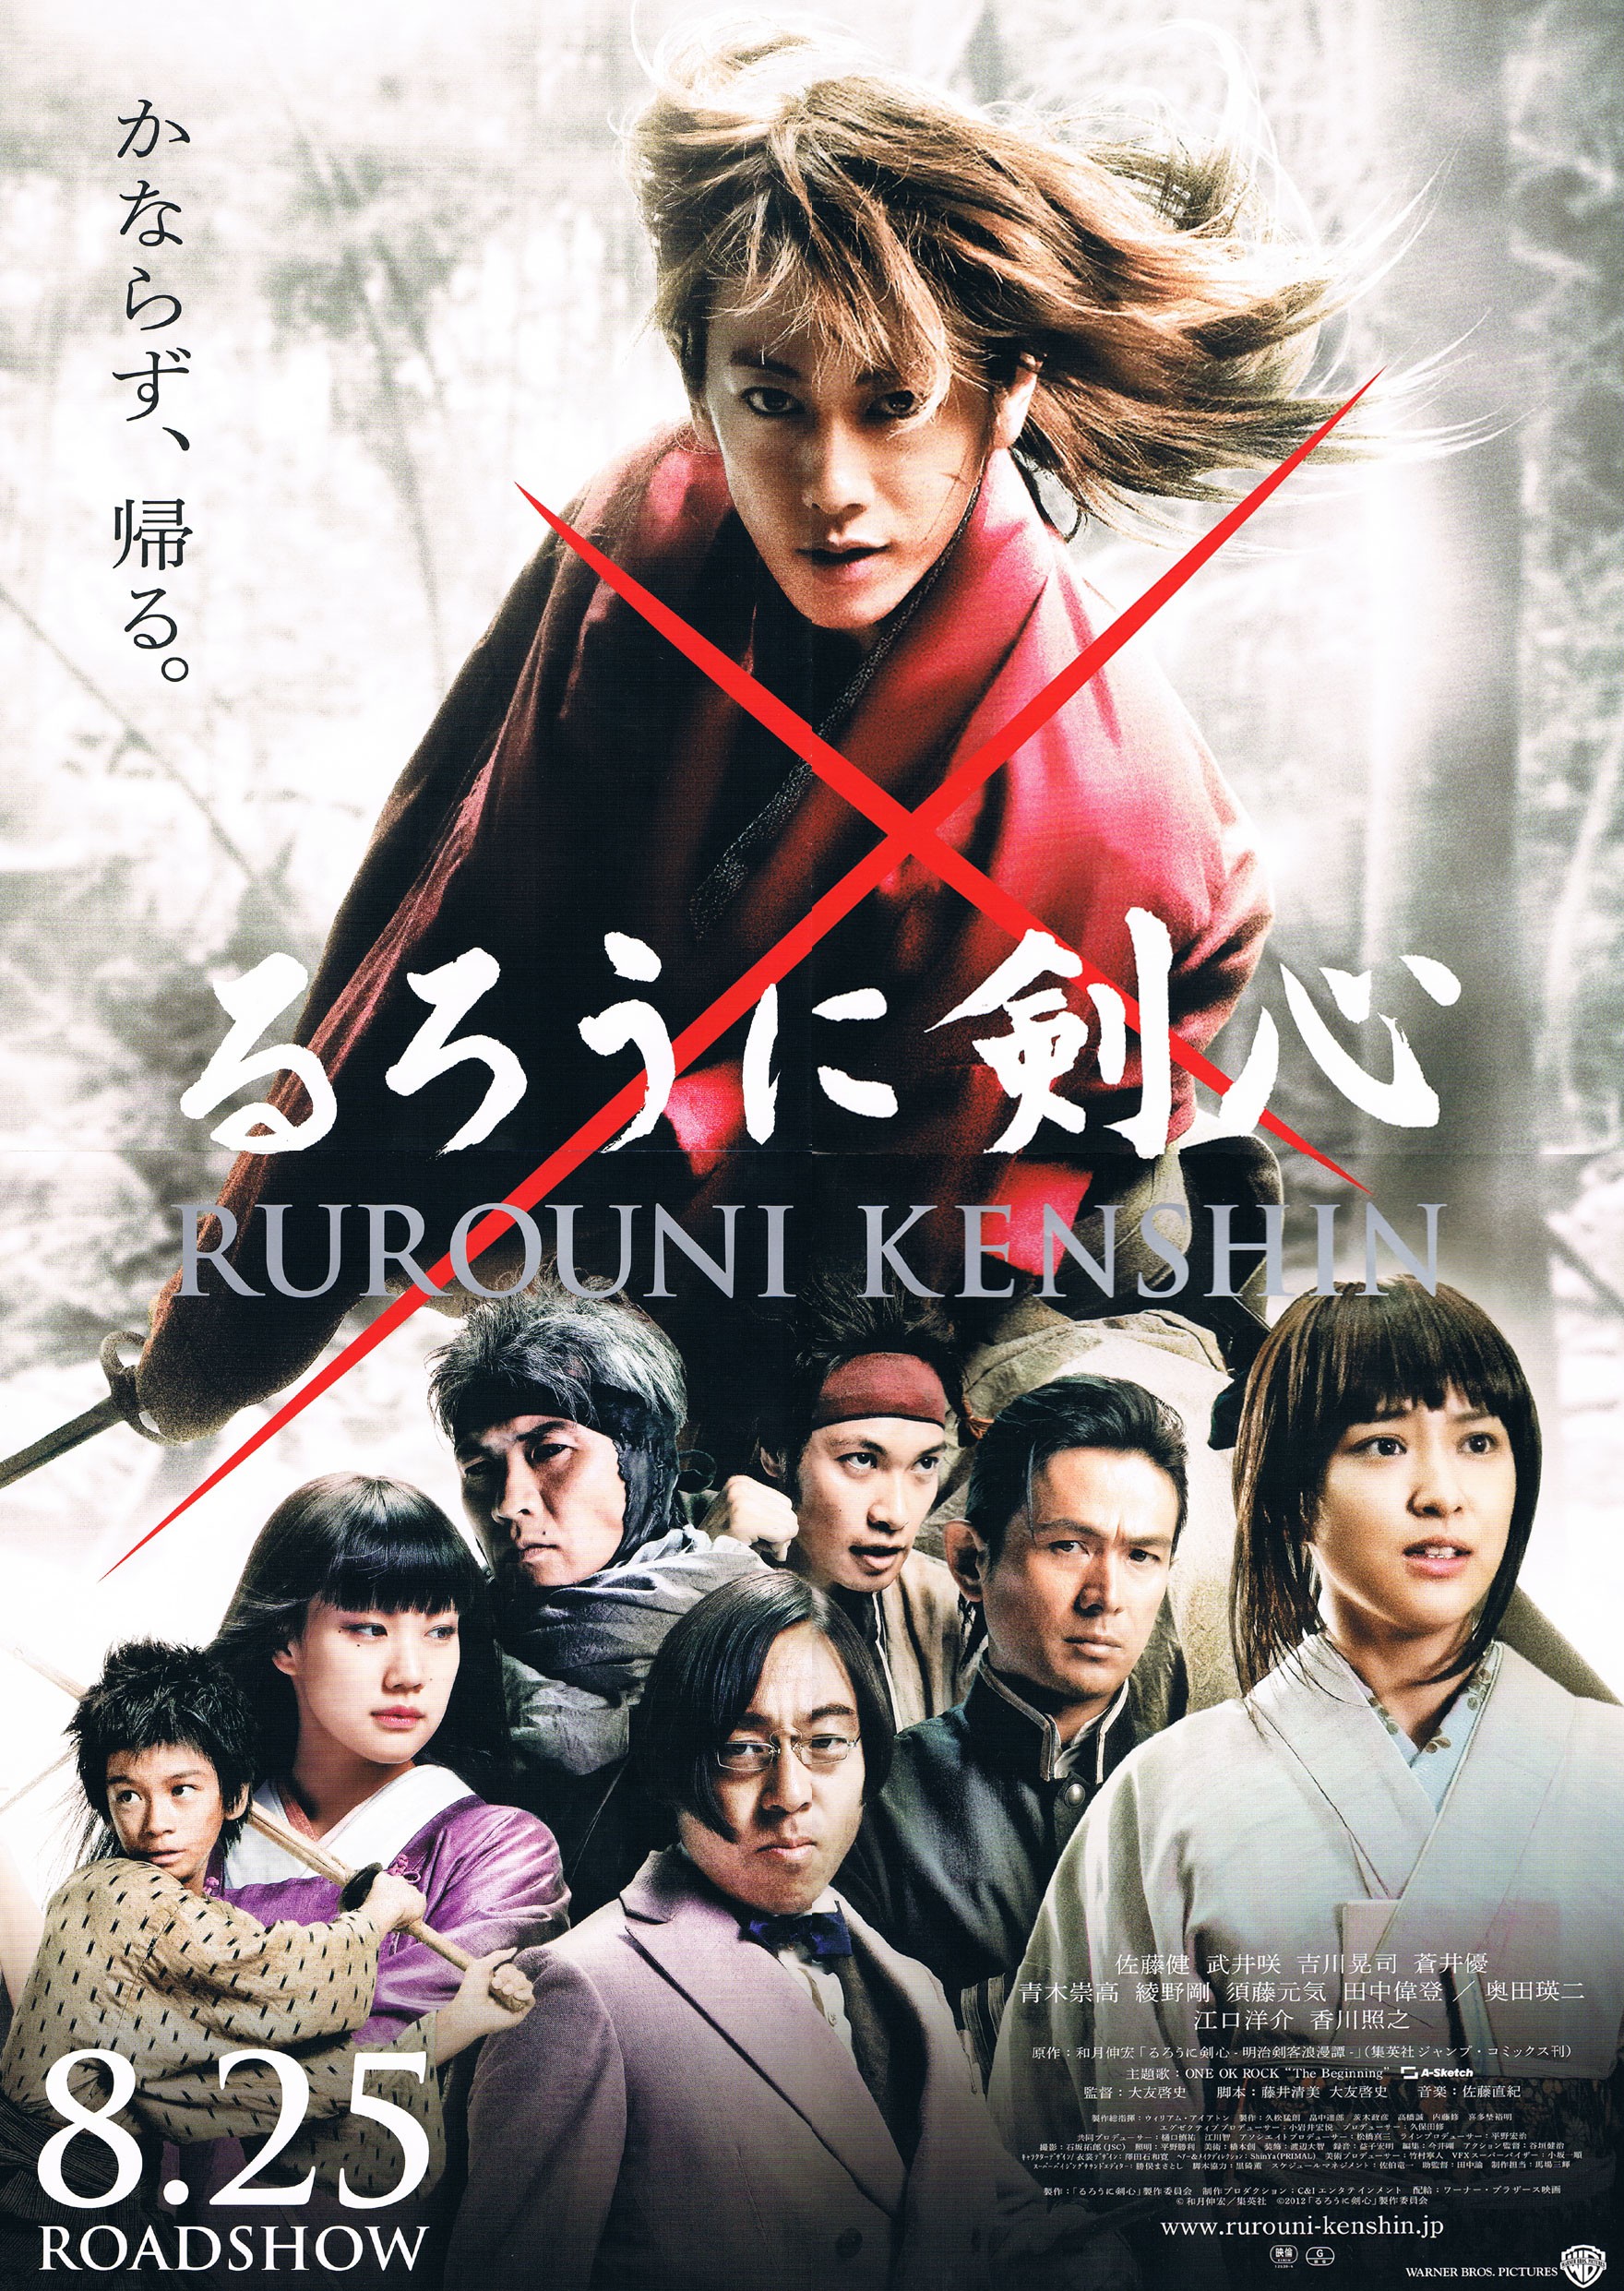 Mega Sized Movie Poster Image for Rurouni Kenshin (#1 of 2)